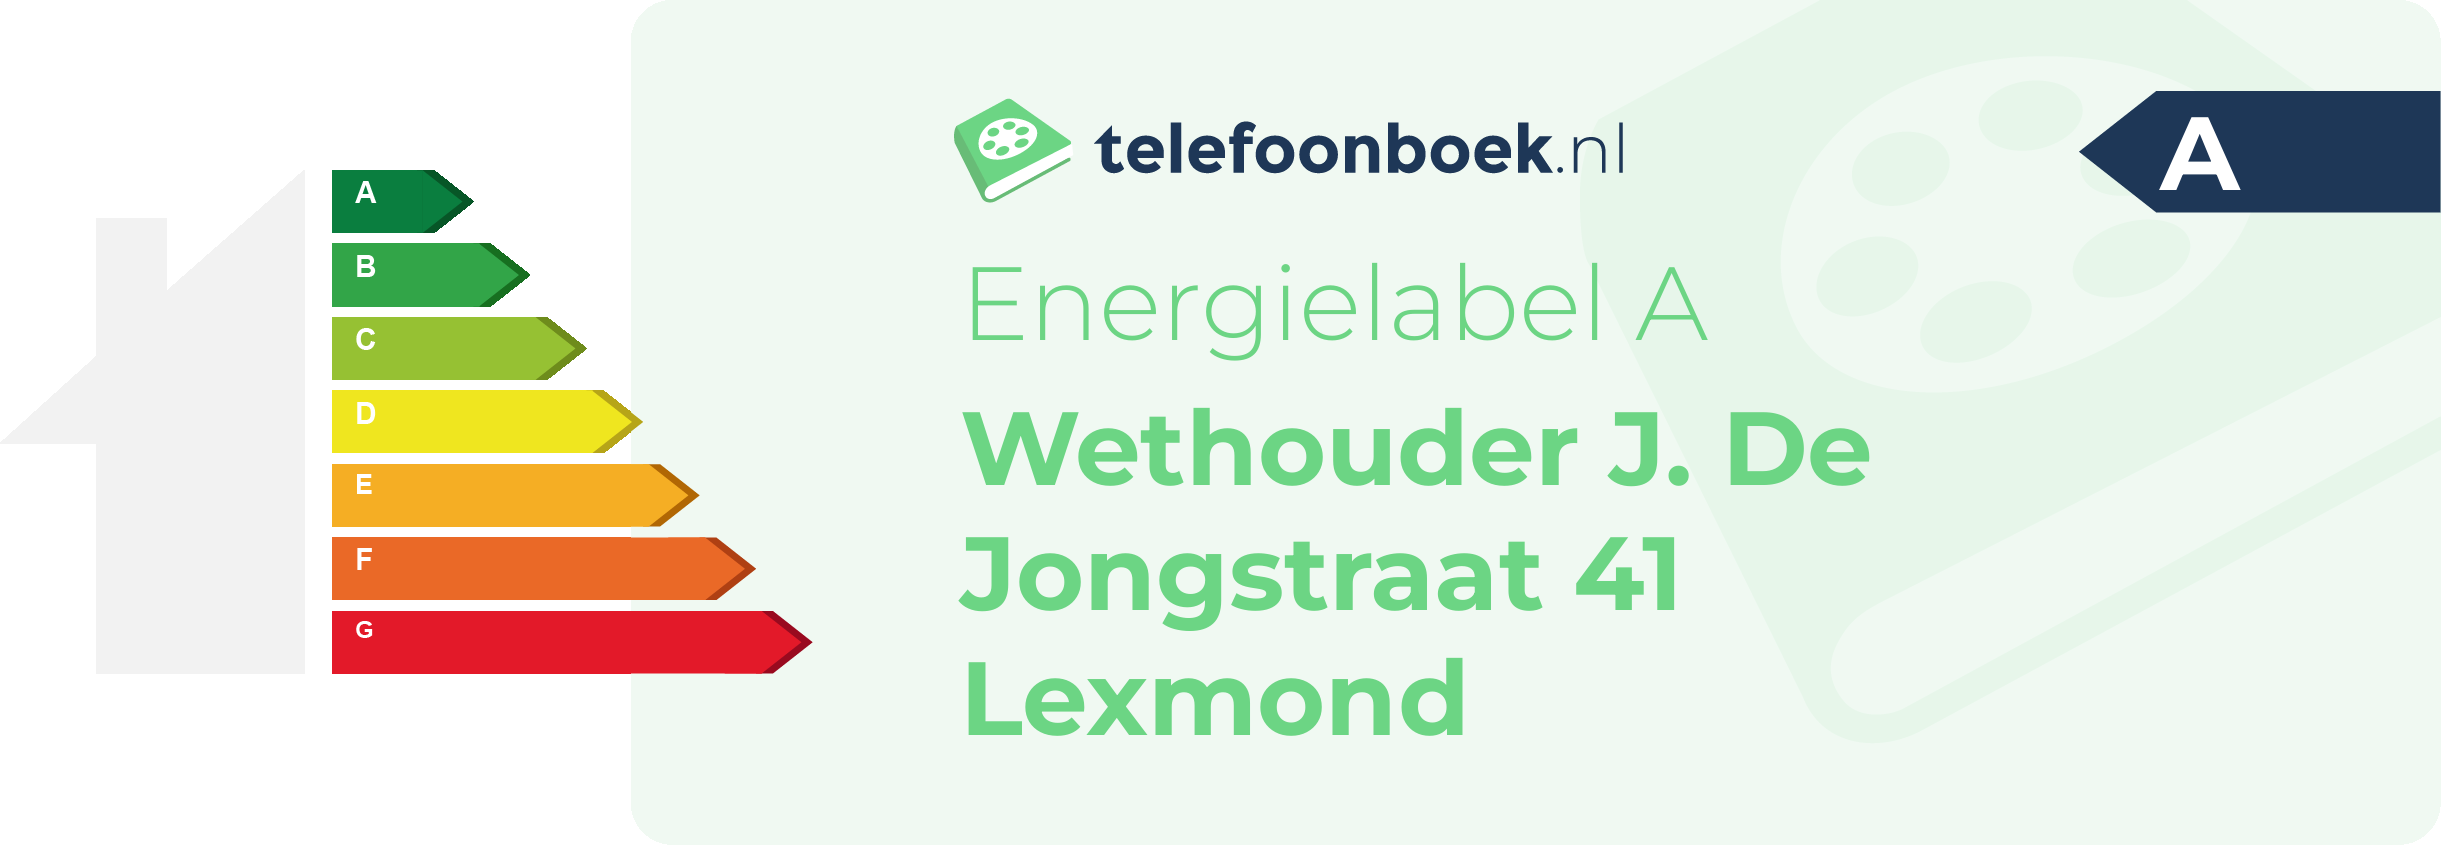 Energielabel Wethouder J. De Jongstraat 41 Lexmond